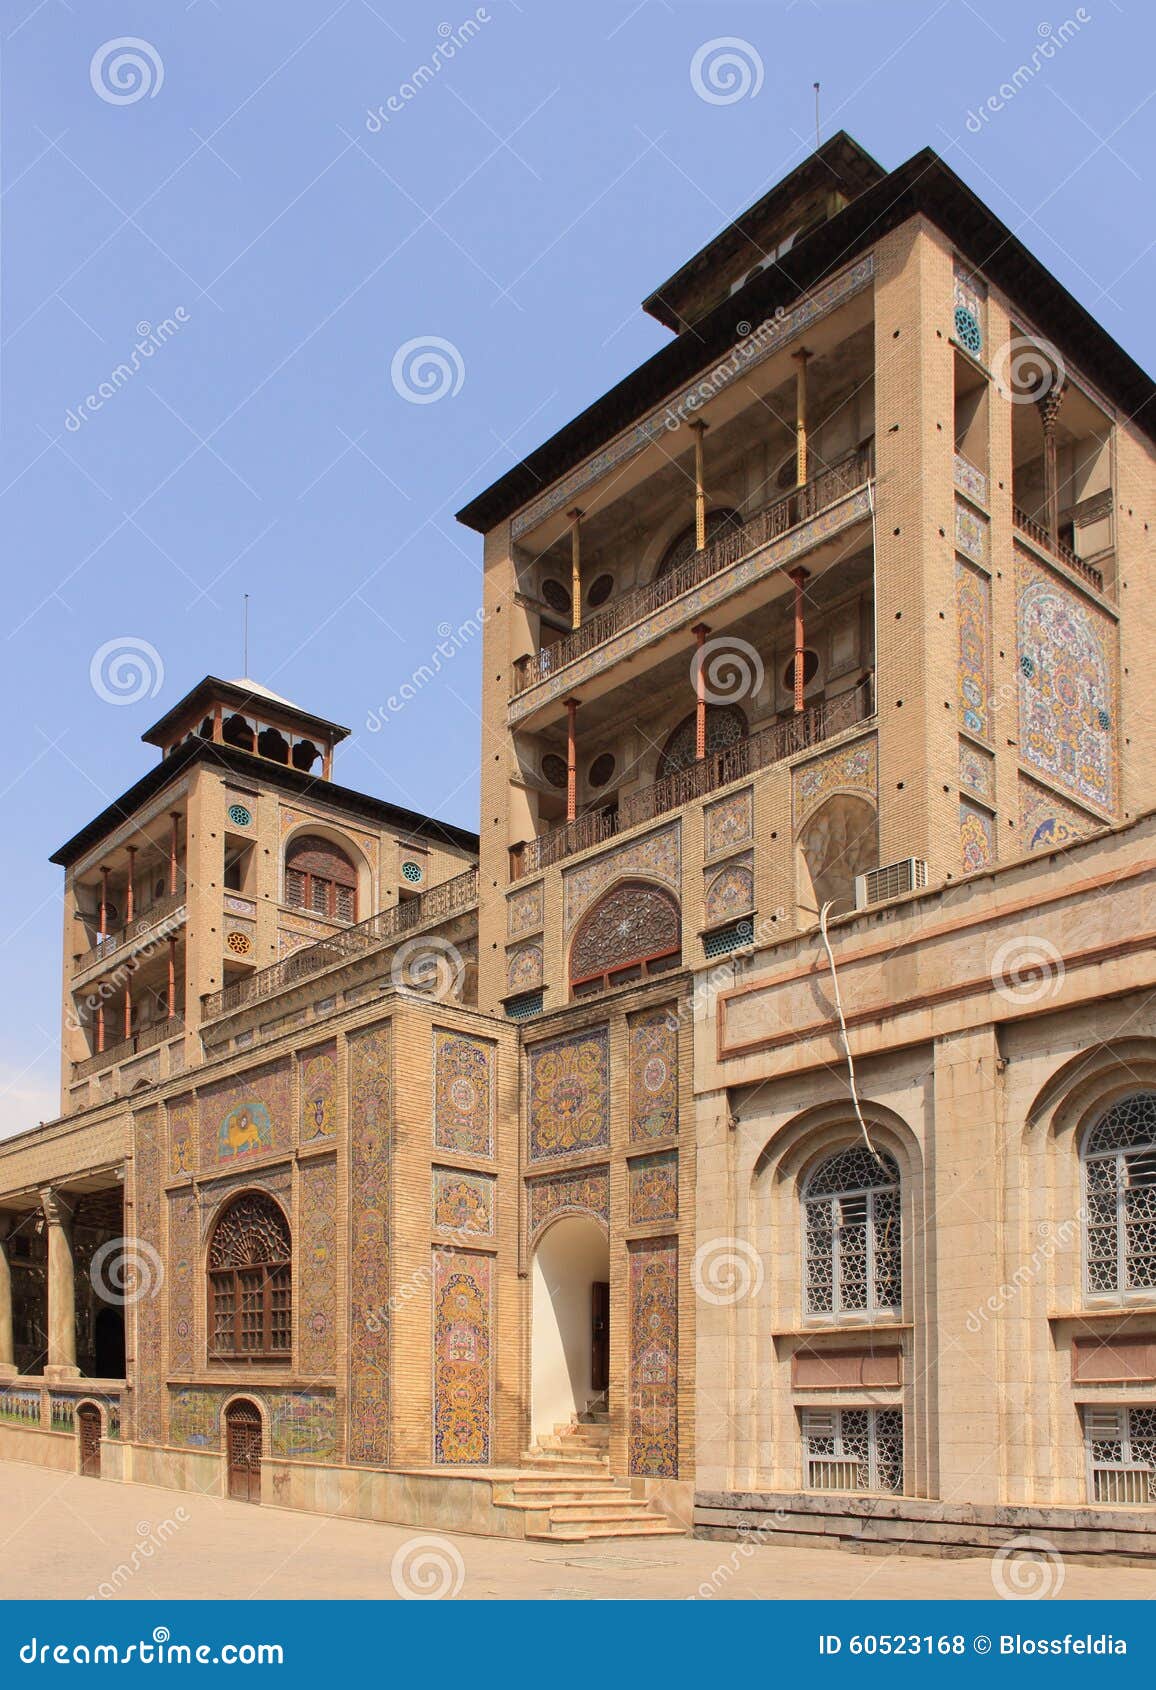 edifice of the sun (shams ol emareh) in golestan palace (iran)